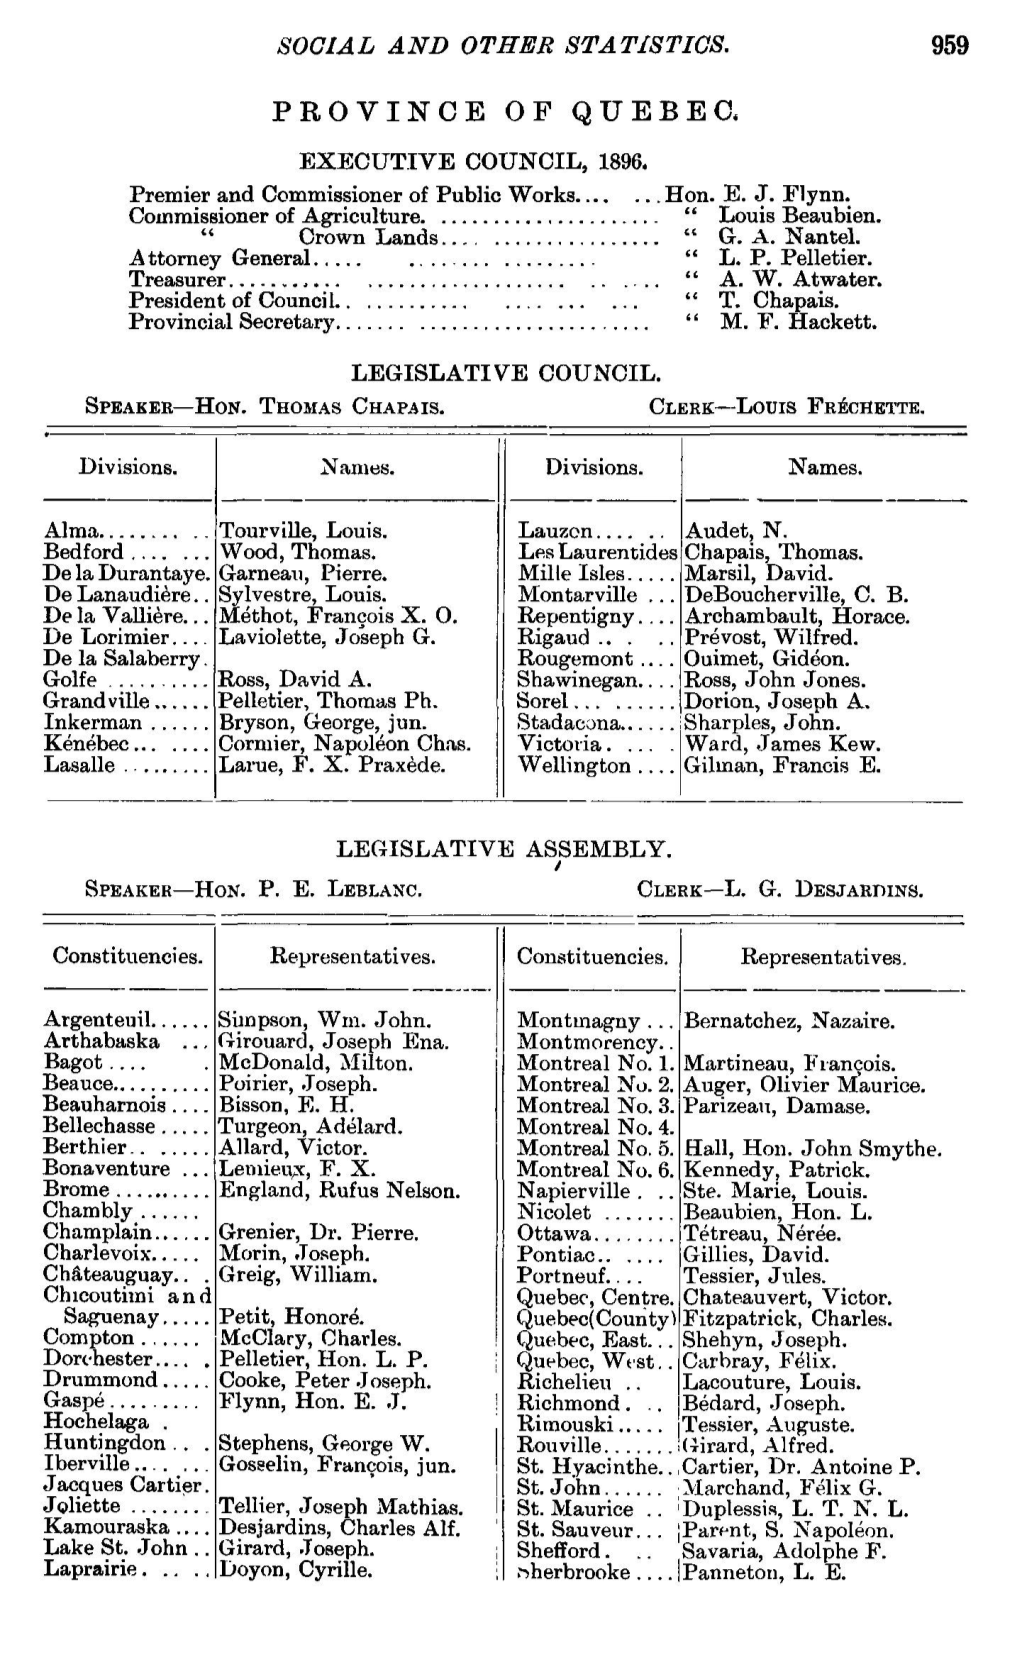 Province of Quebec, Executive Council, 1896